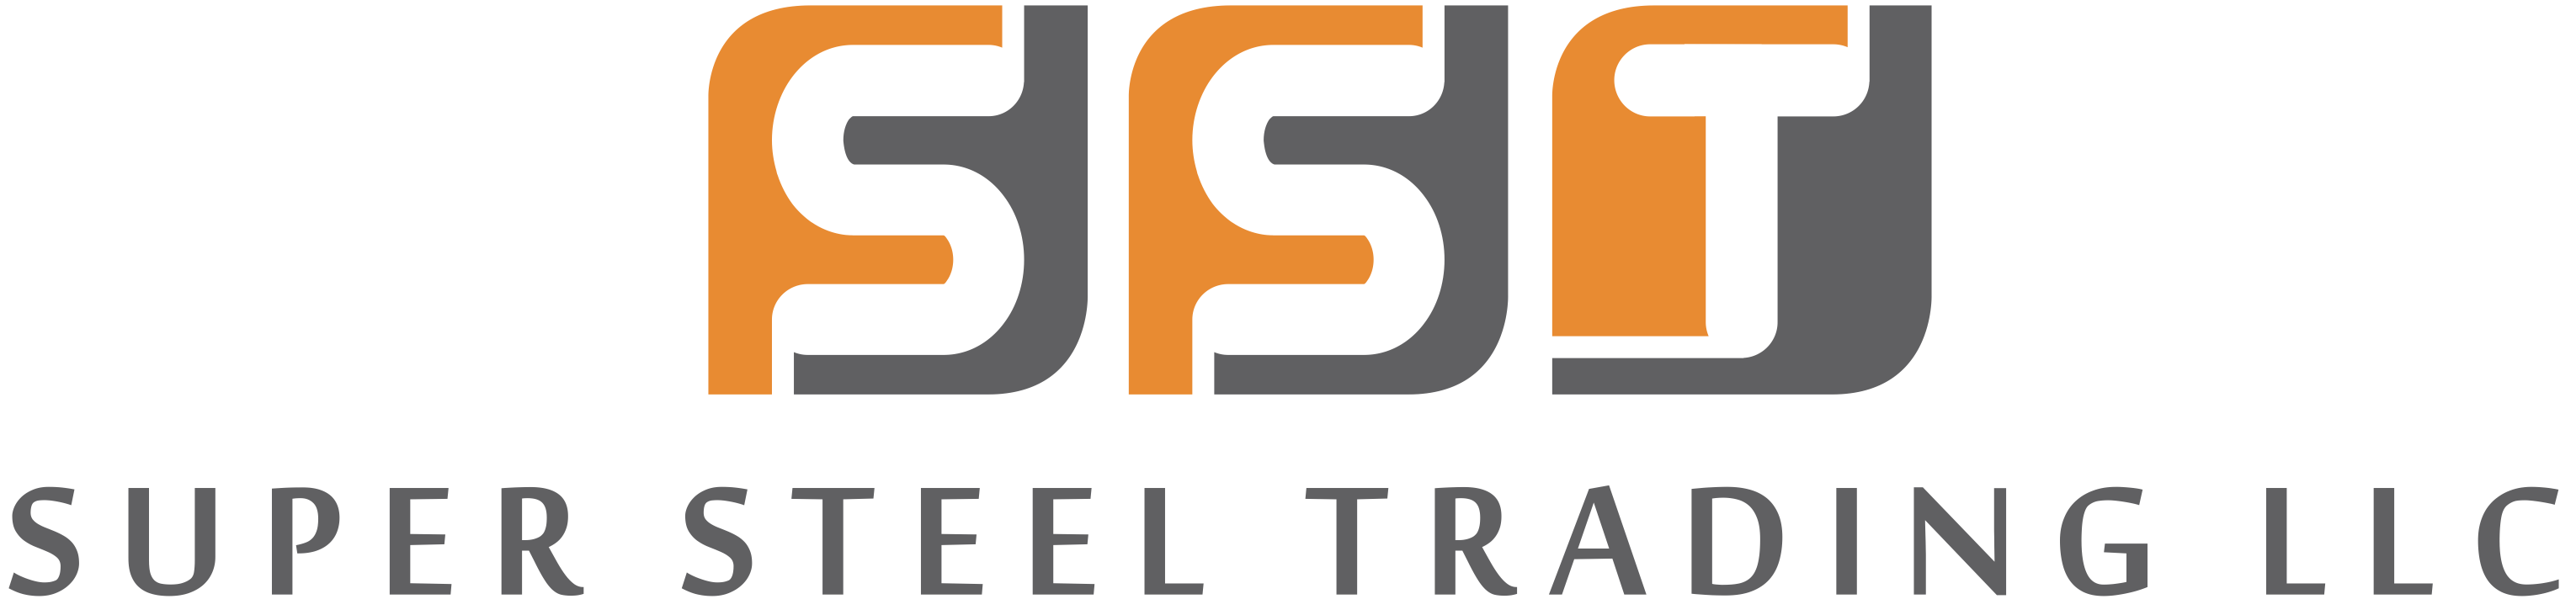 Super Steel Trading LLC 